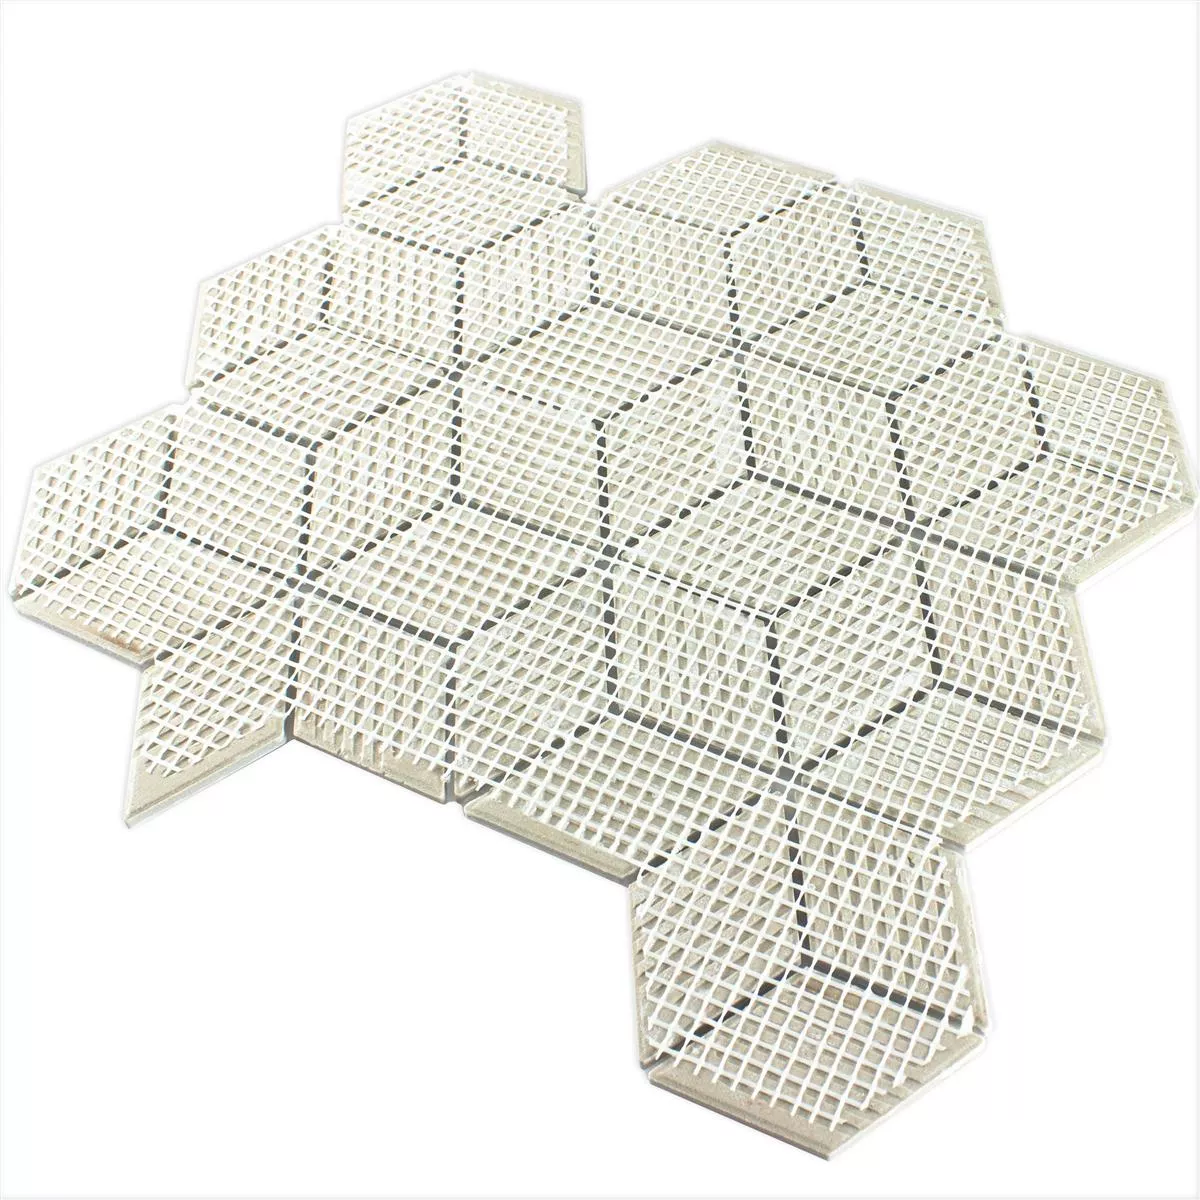 Sample Ceramic Mosaic Tiles Cavalier 3D Cube Mat Black